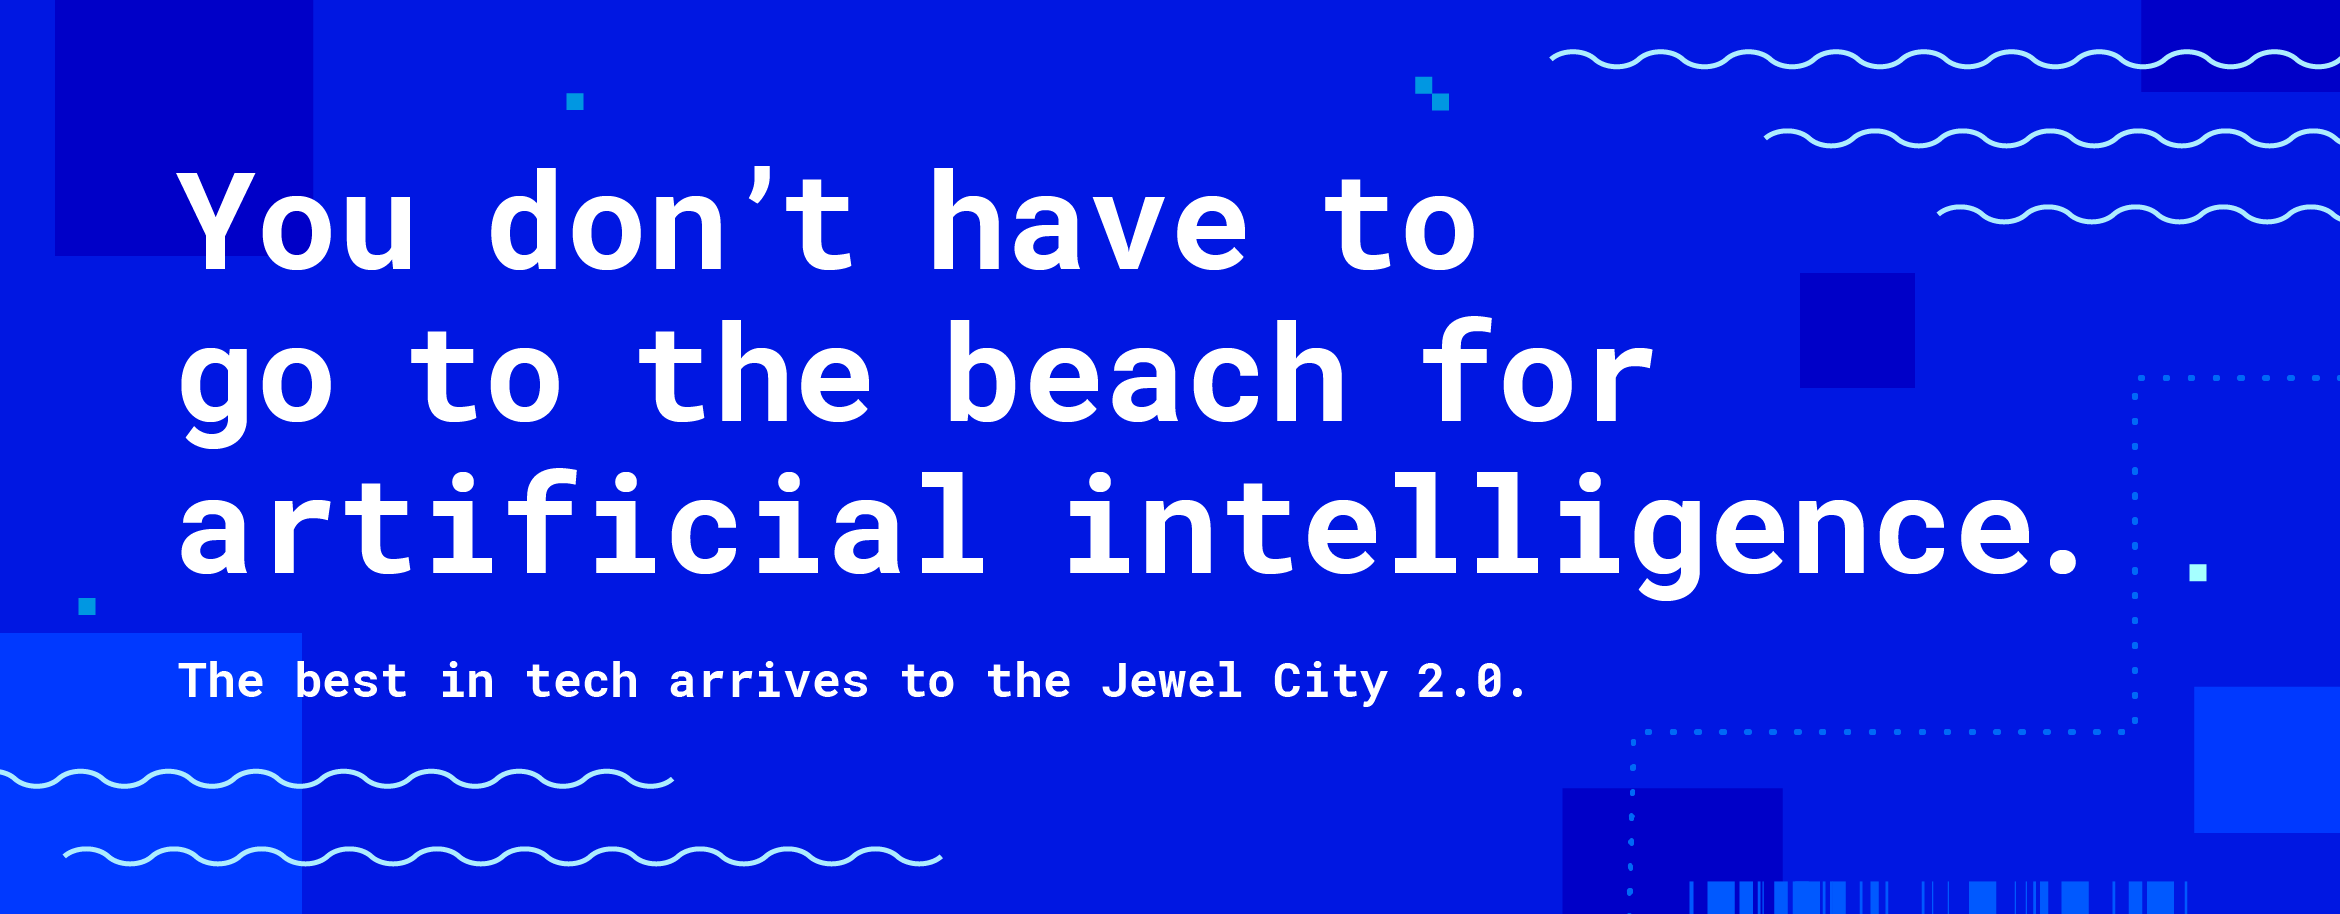 Glendale Tech Week Beach digital banner designed by Kilter